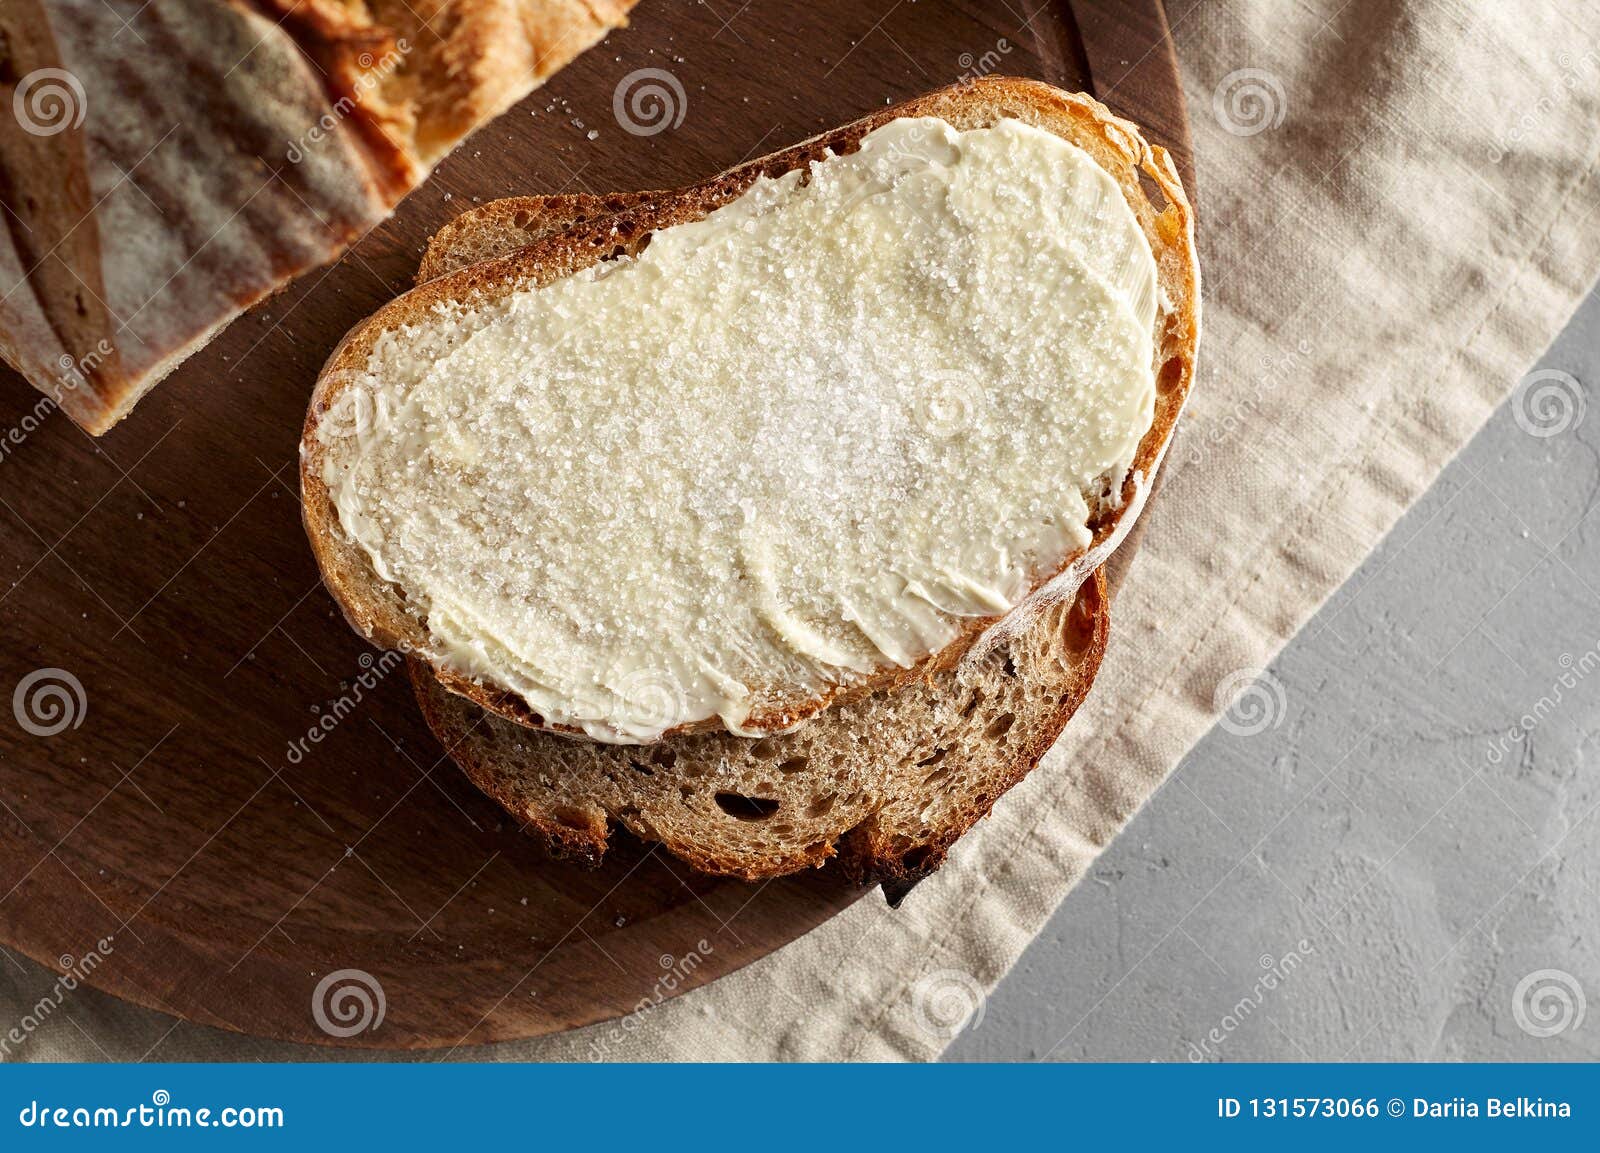 Хлеб сахар вода. Бутерброд хлеб масло сахар. Хлеб с маслом и сахаром. Бутерброд с маслом. Хлеб с маслом и солью.